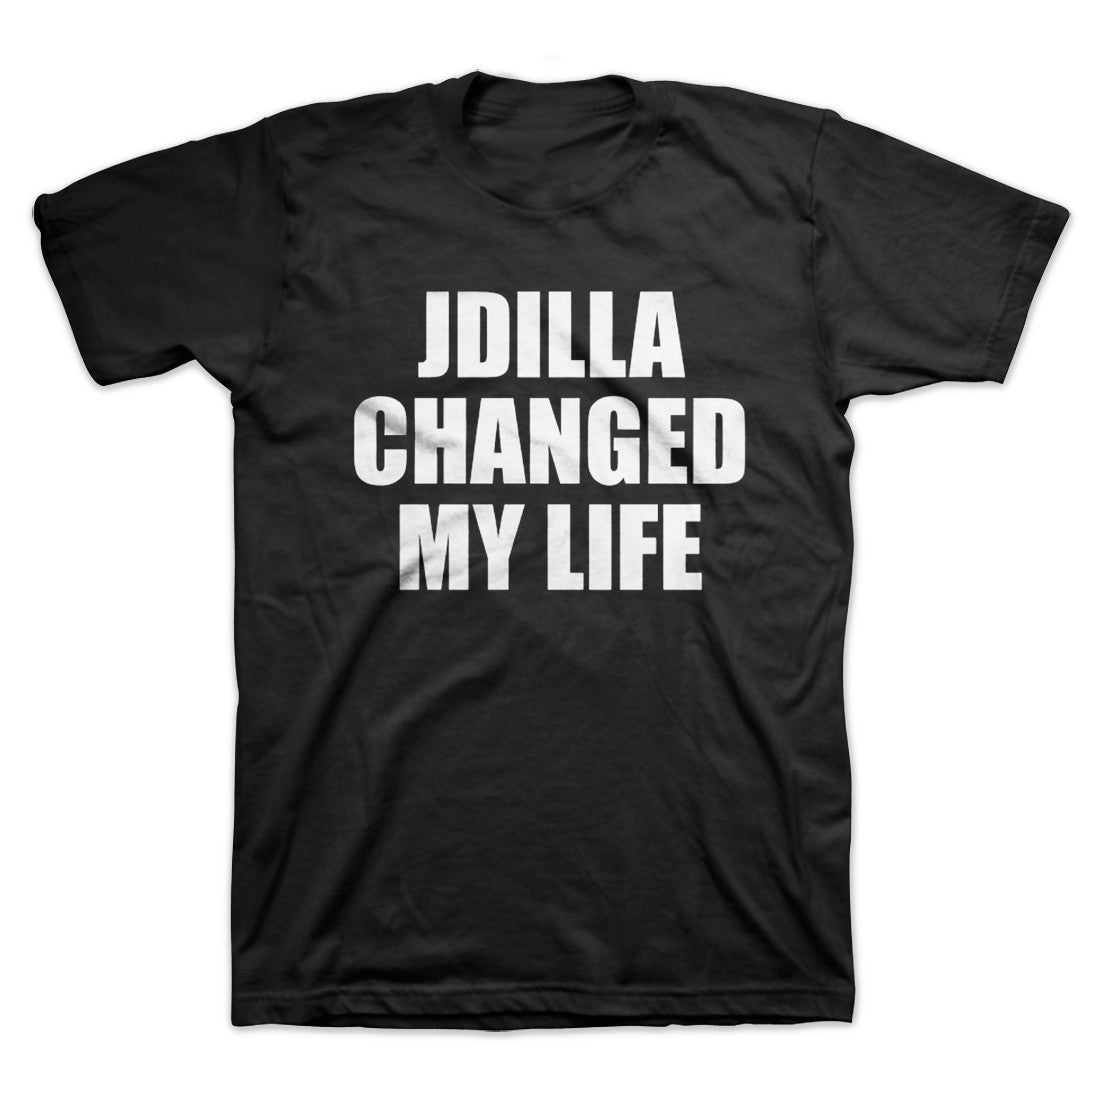 J Dilla - Changed My Life Men's Shirt, Black - The Giant Peach